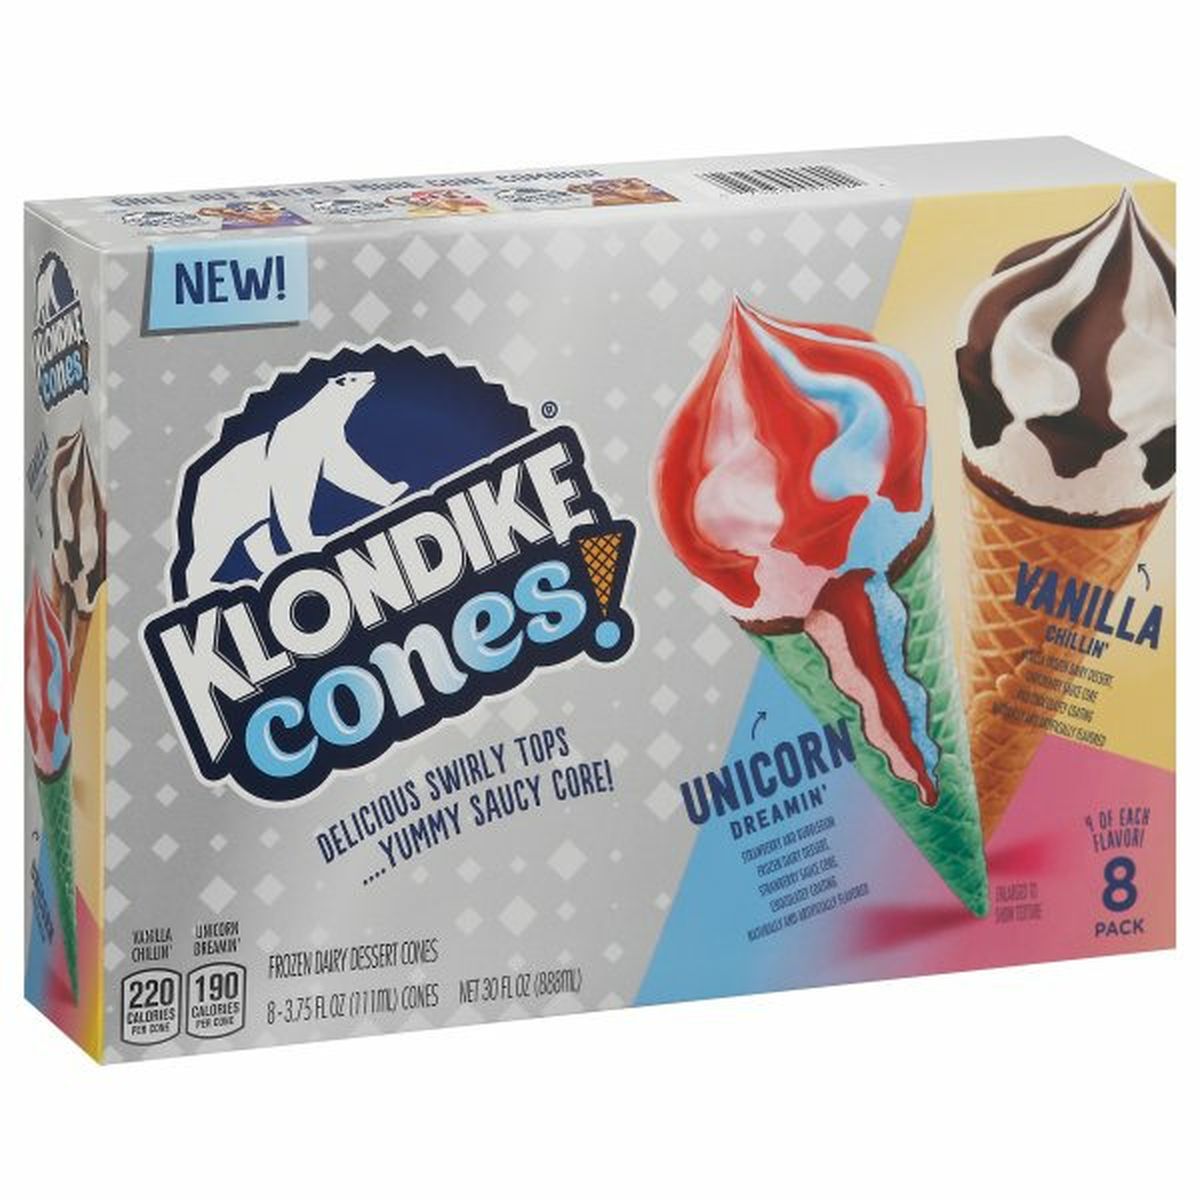 Calories in Klondike Cones! Frozen Dairy Dessert Cones, Unicorn Dreamin/Vanilla Chillin, 8 Pack